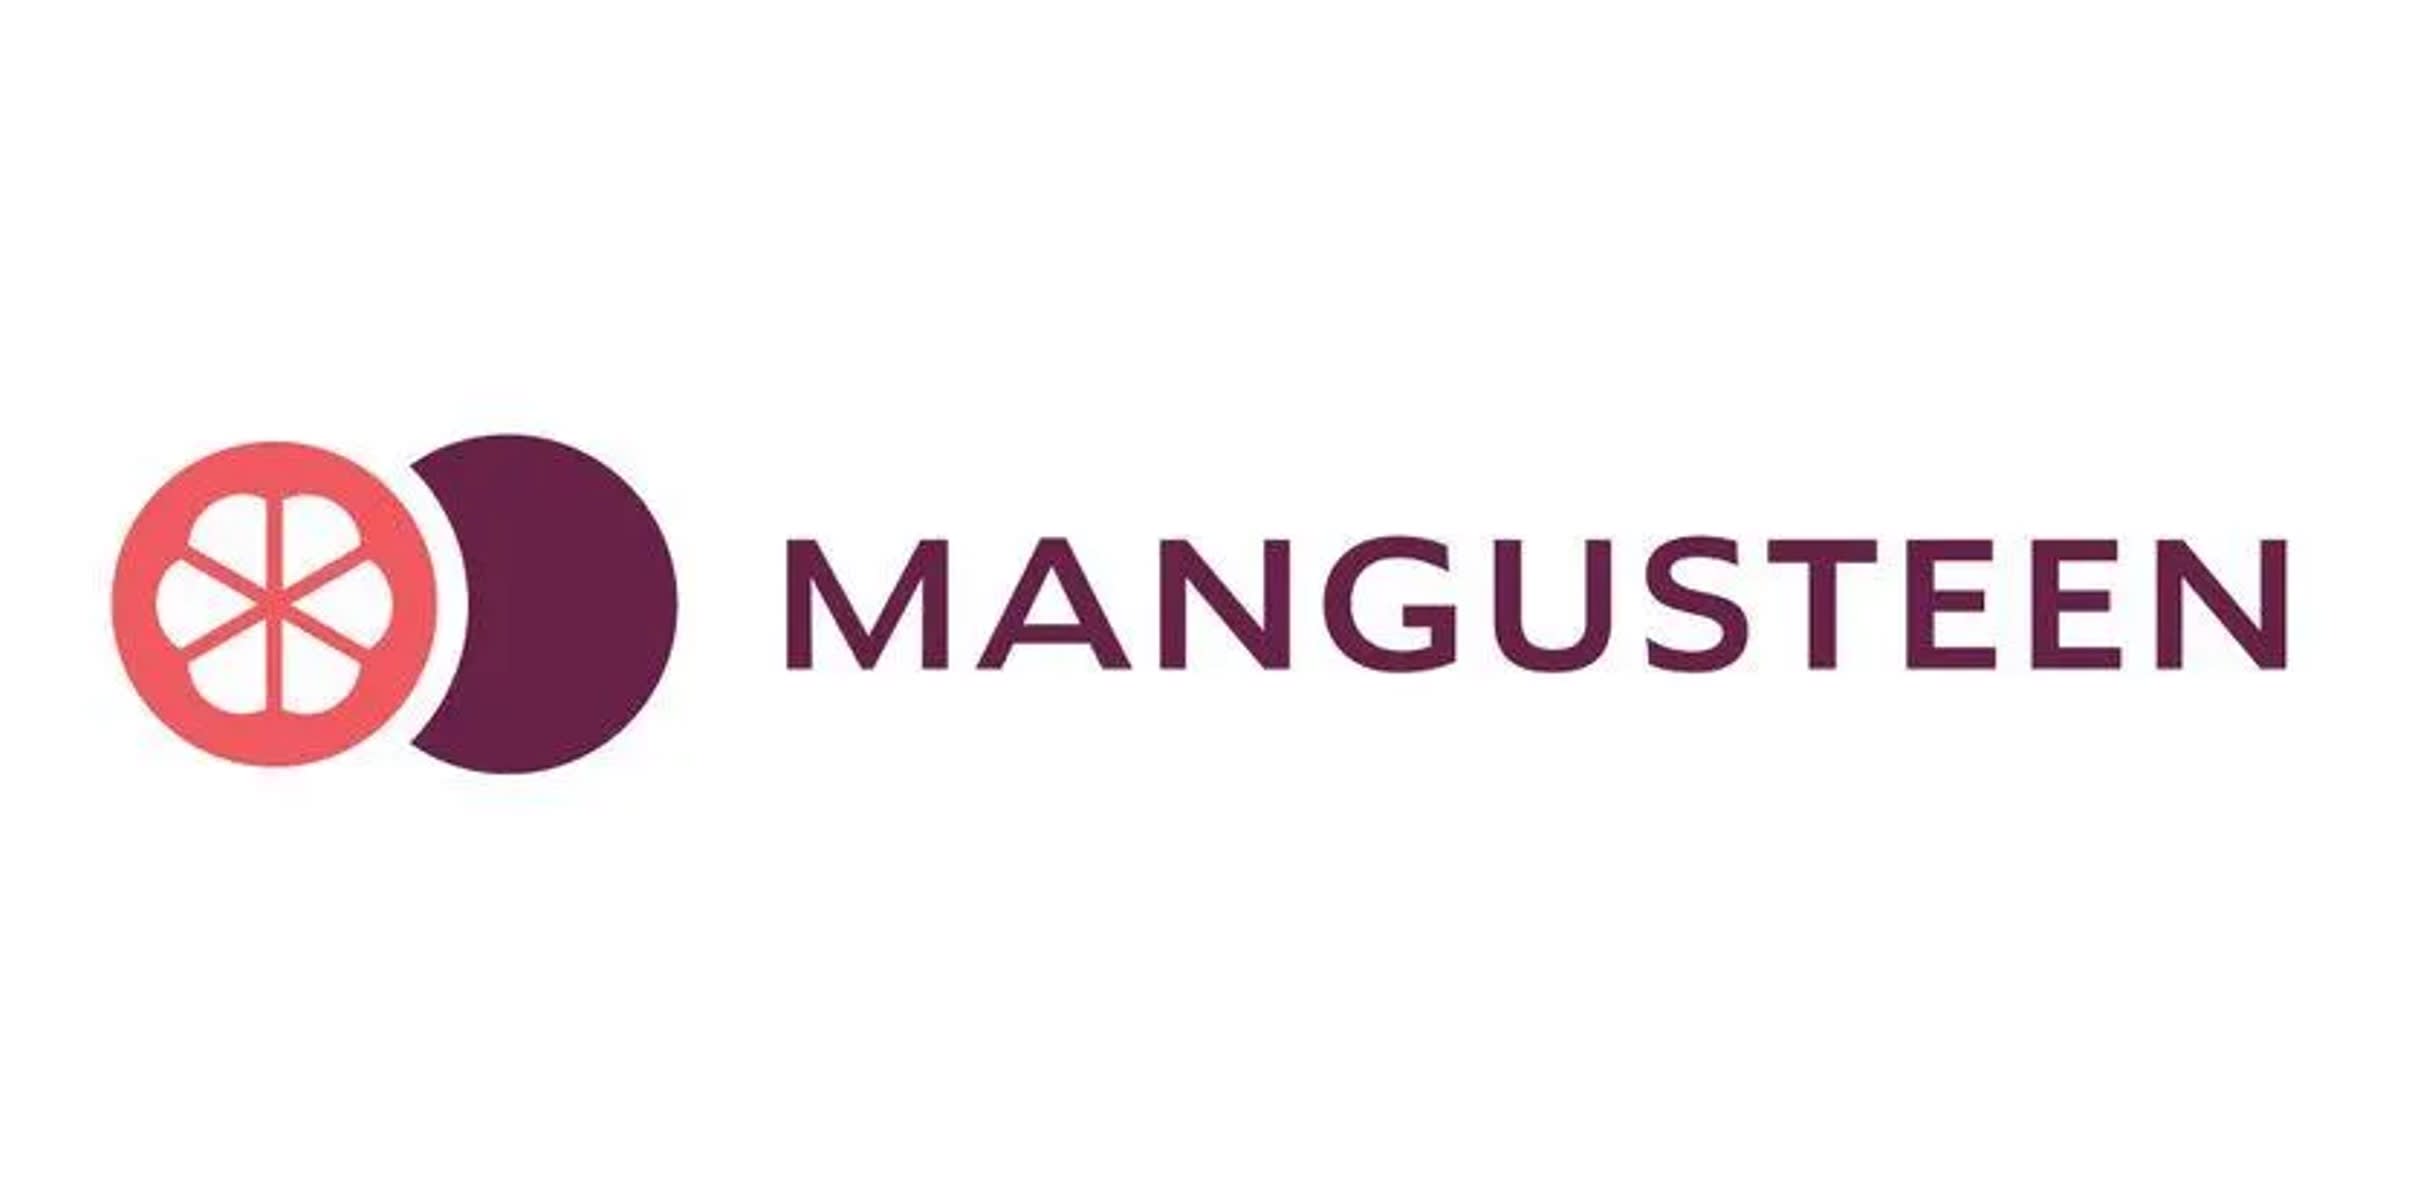 Mangusteen logo